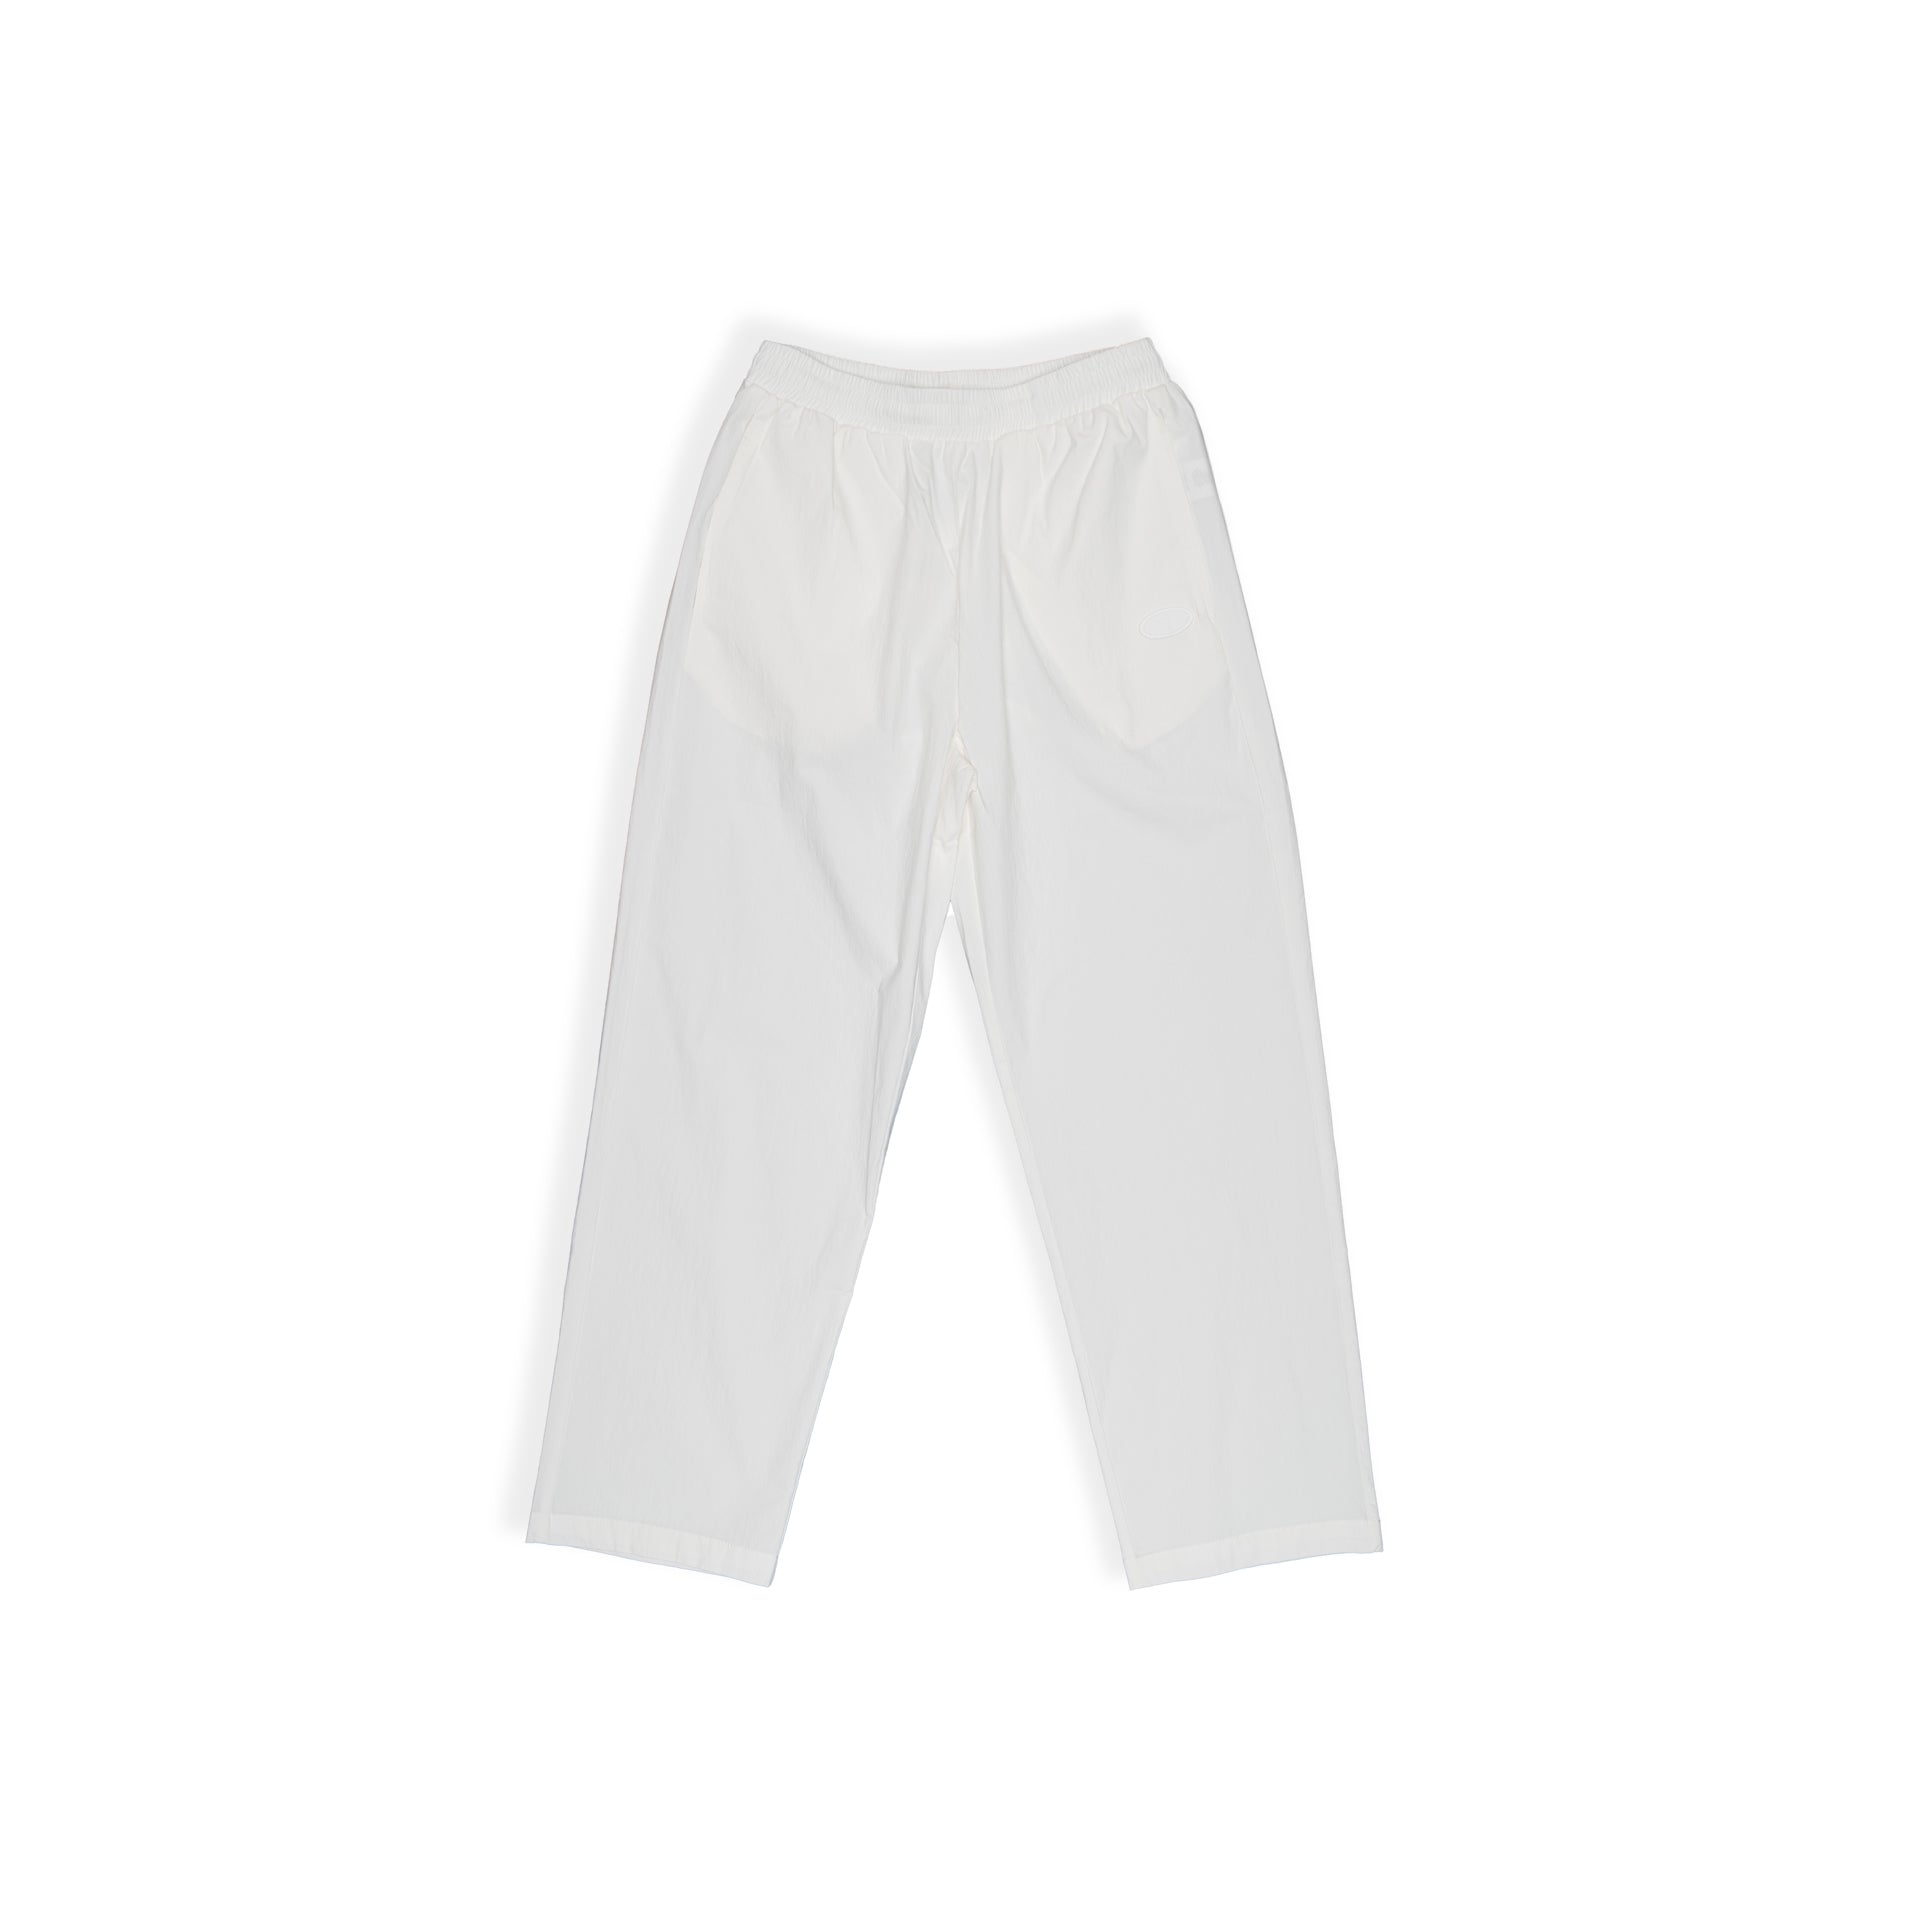 White Premium Pants by Brandtionary